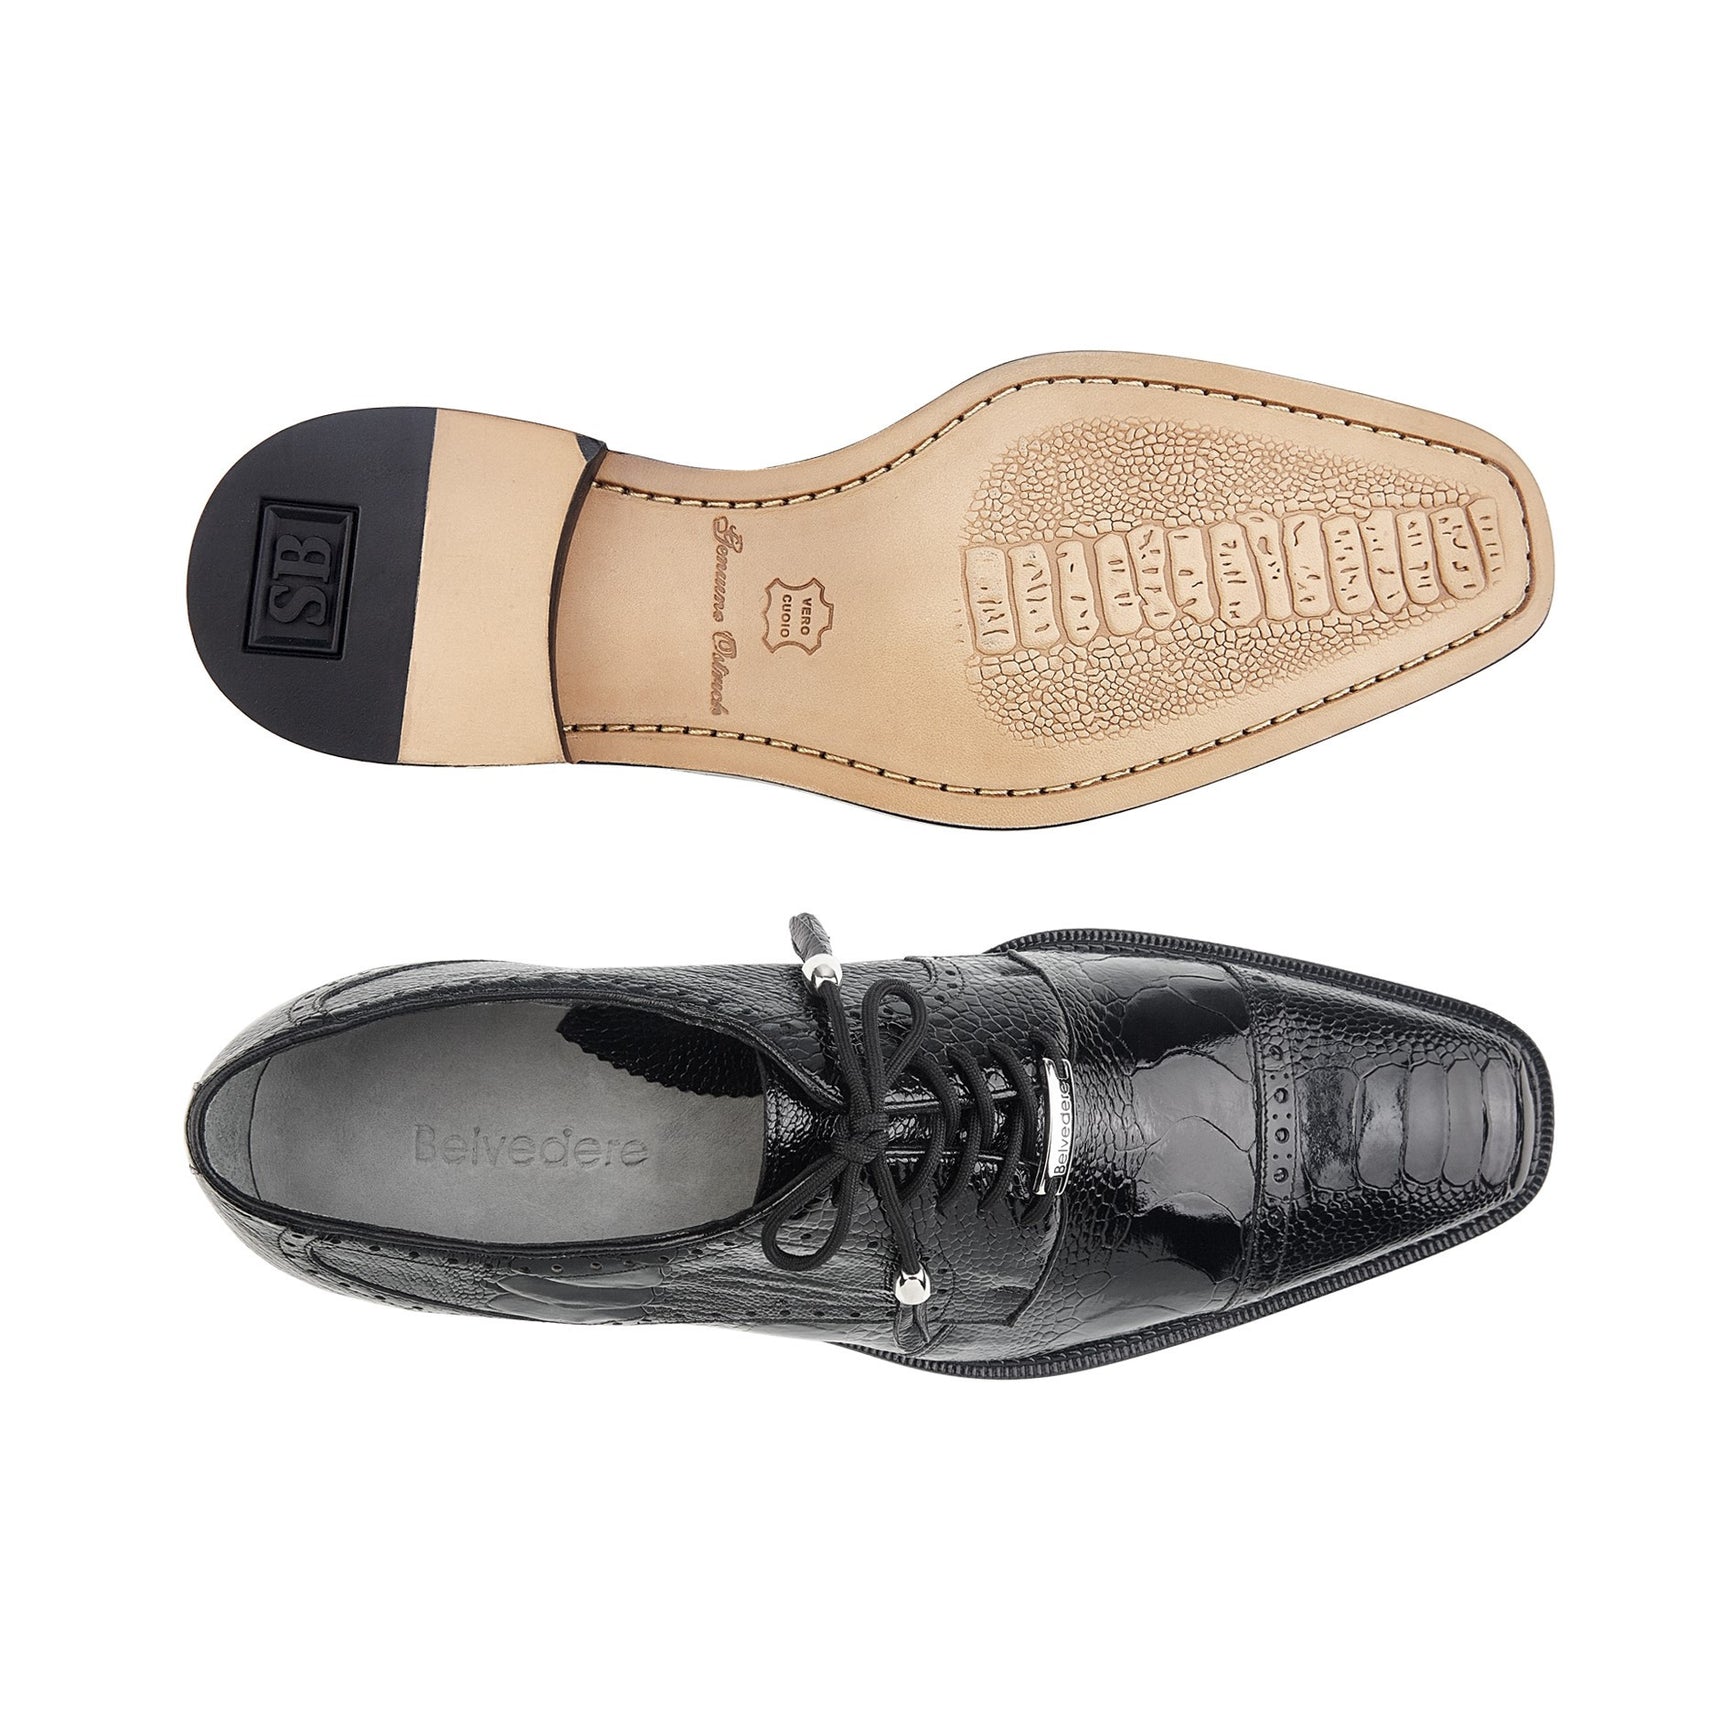 Belvedere Shoes Batta - Black